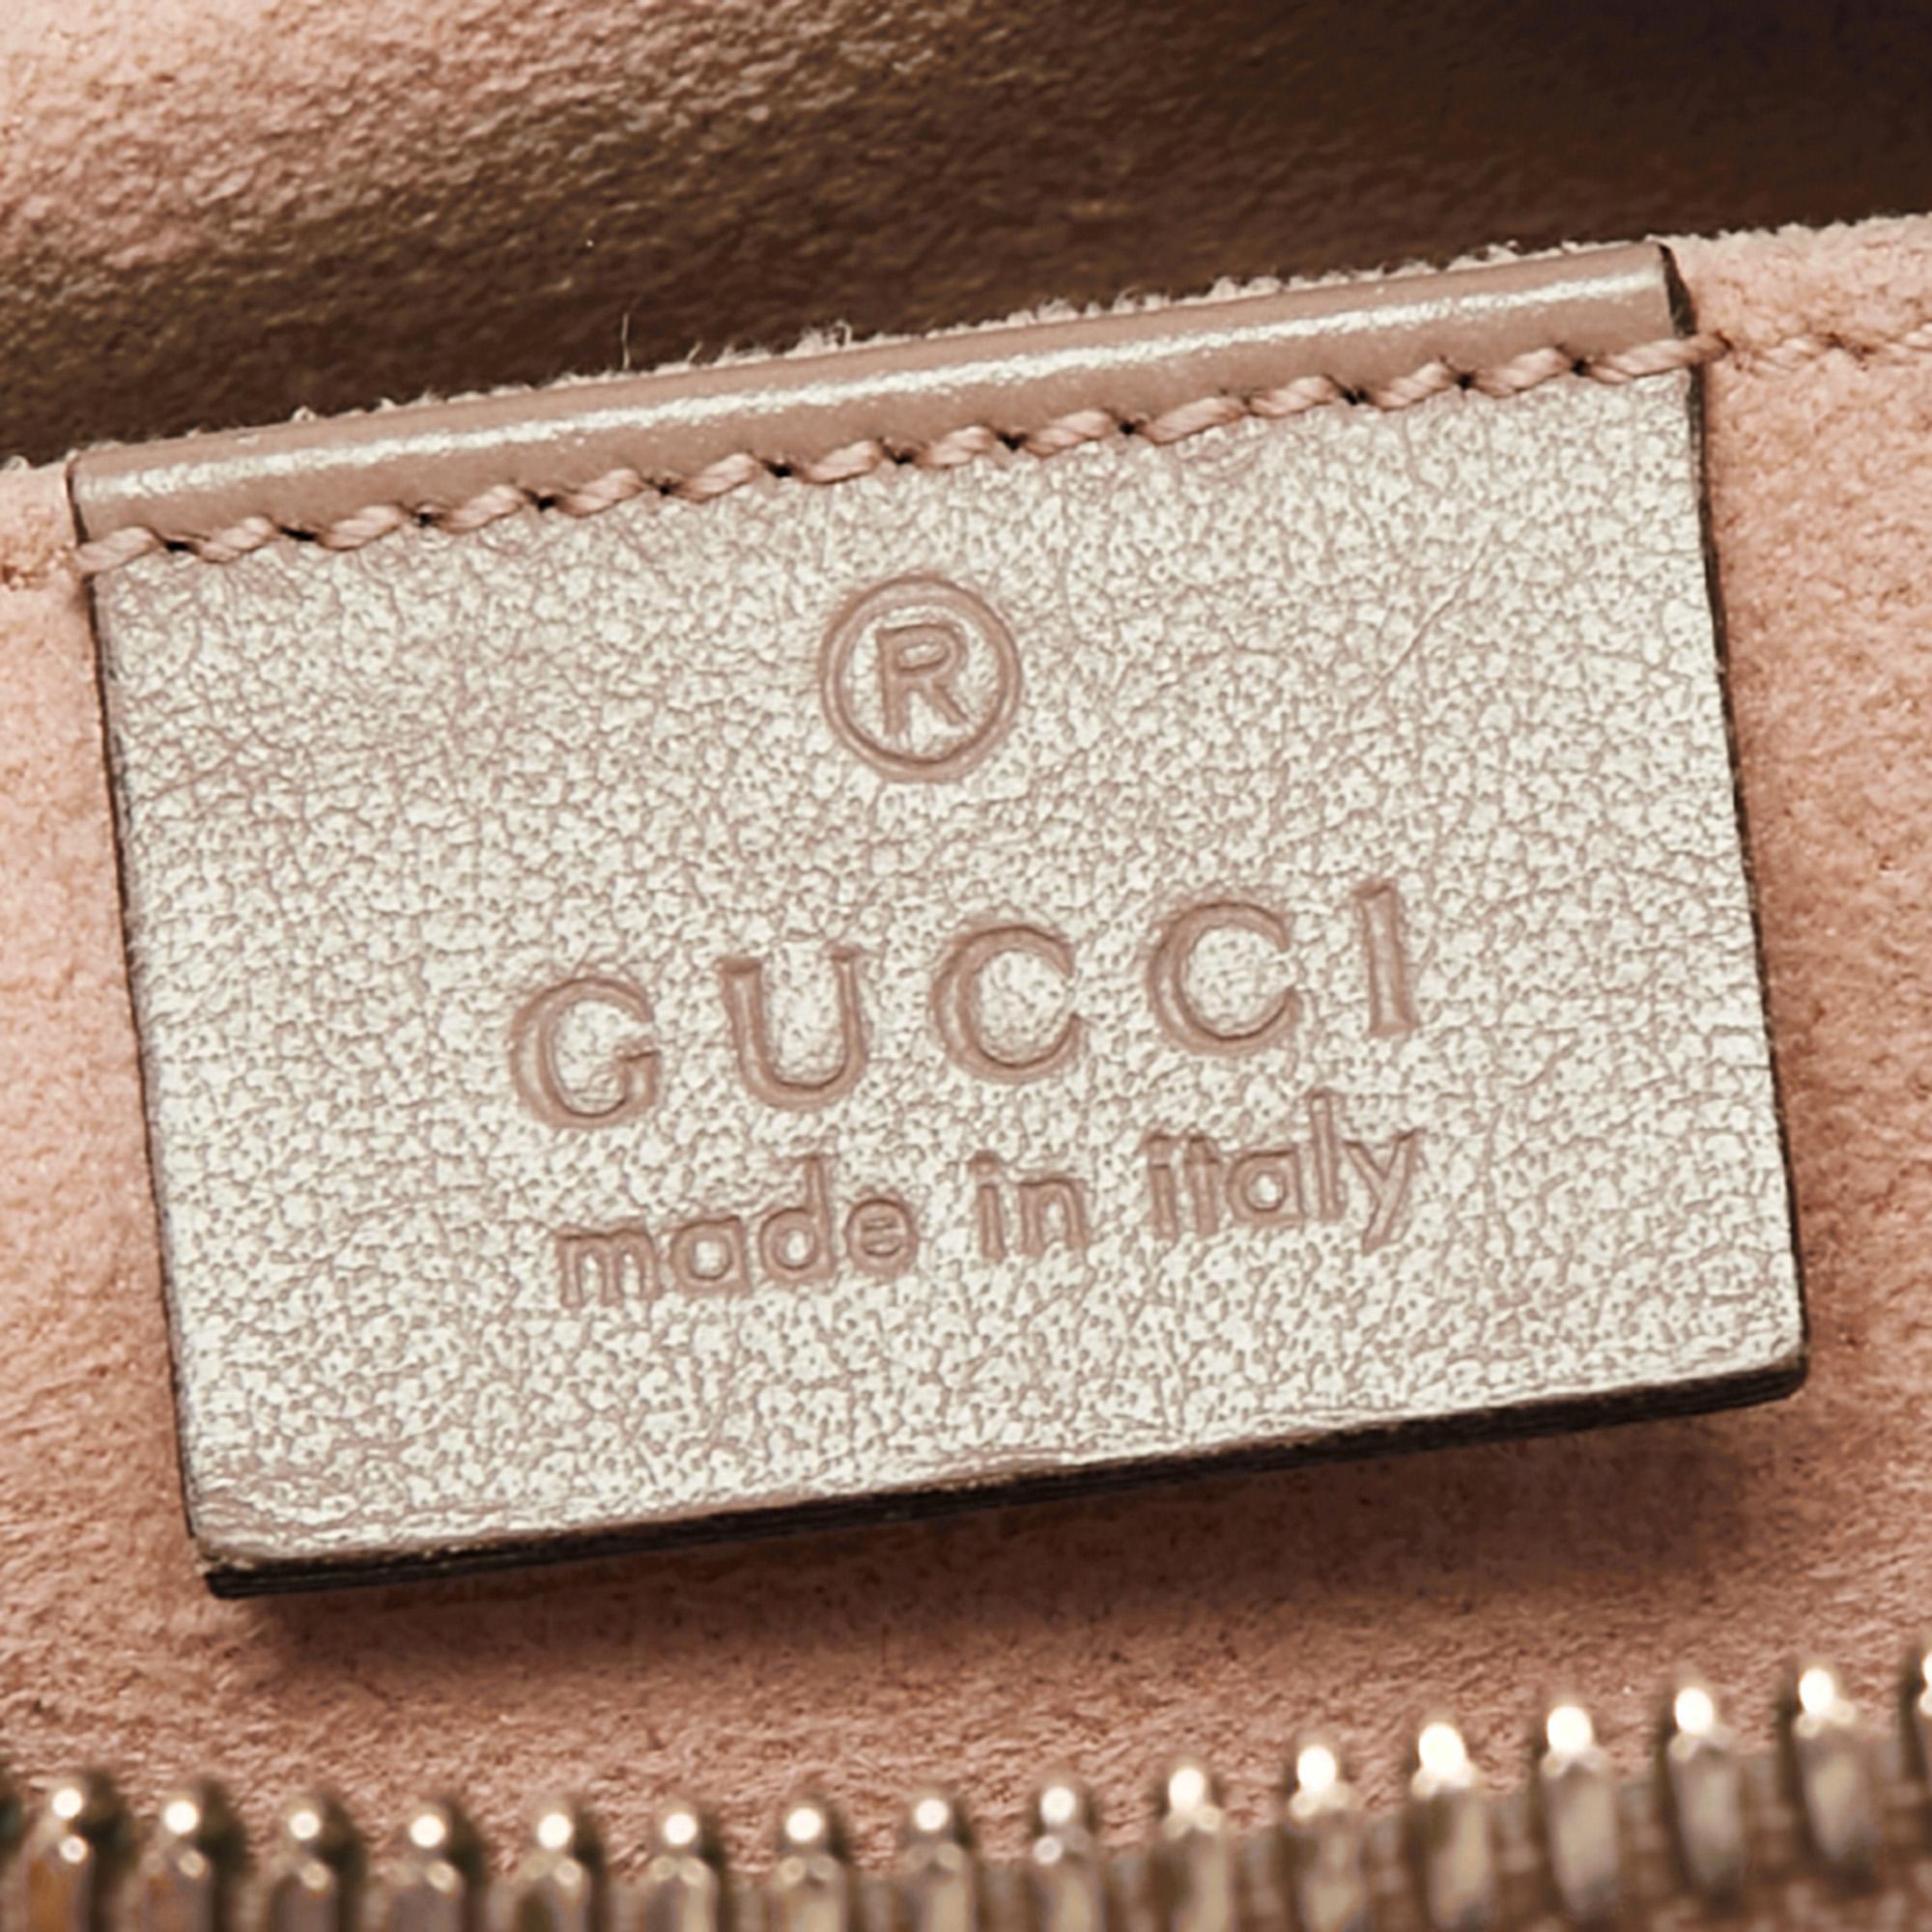 Gucci Beige Matelasse Leather Small GG Marmont Camera Crossbody Bag 5